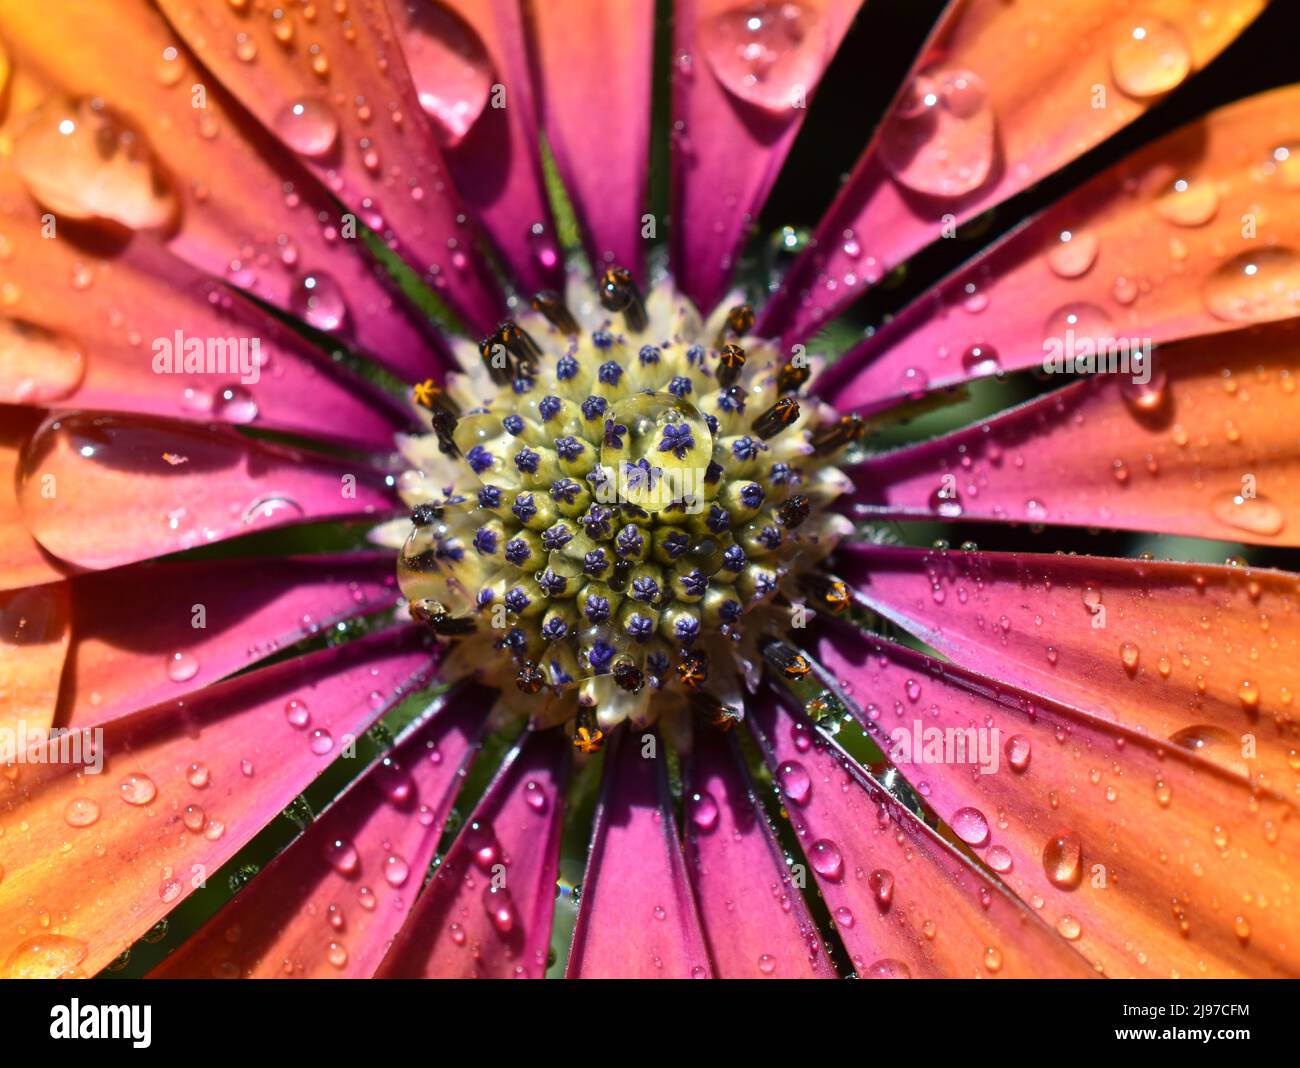 closeup on spanish margurite flower with raindrops Stock Photo